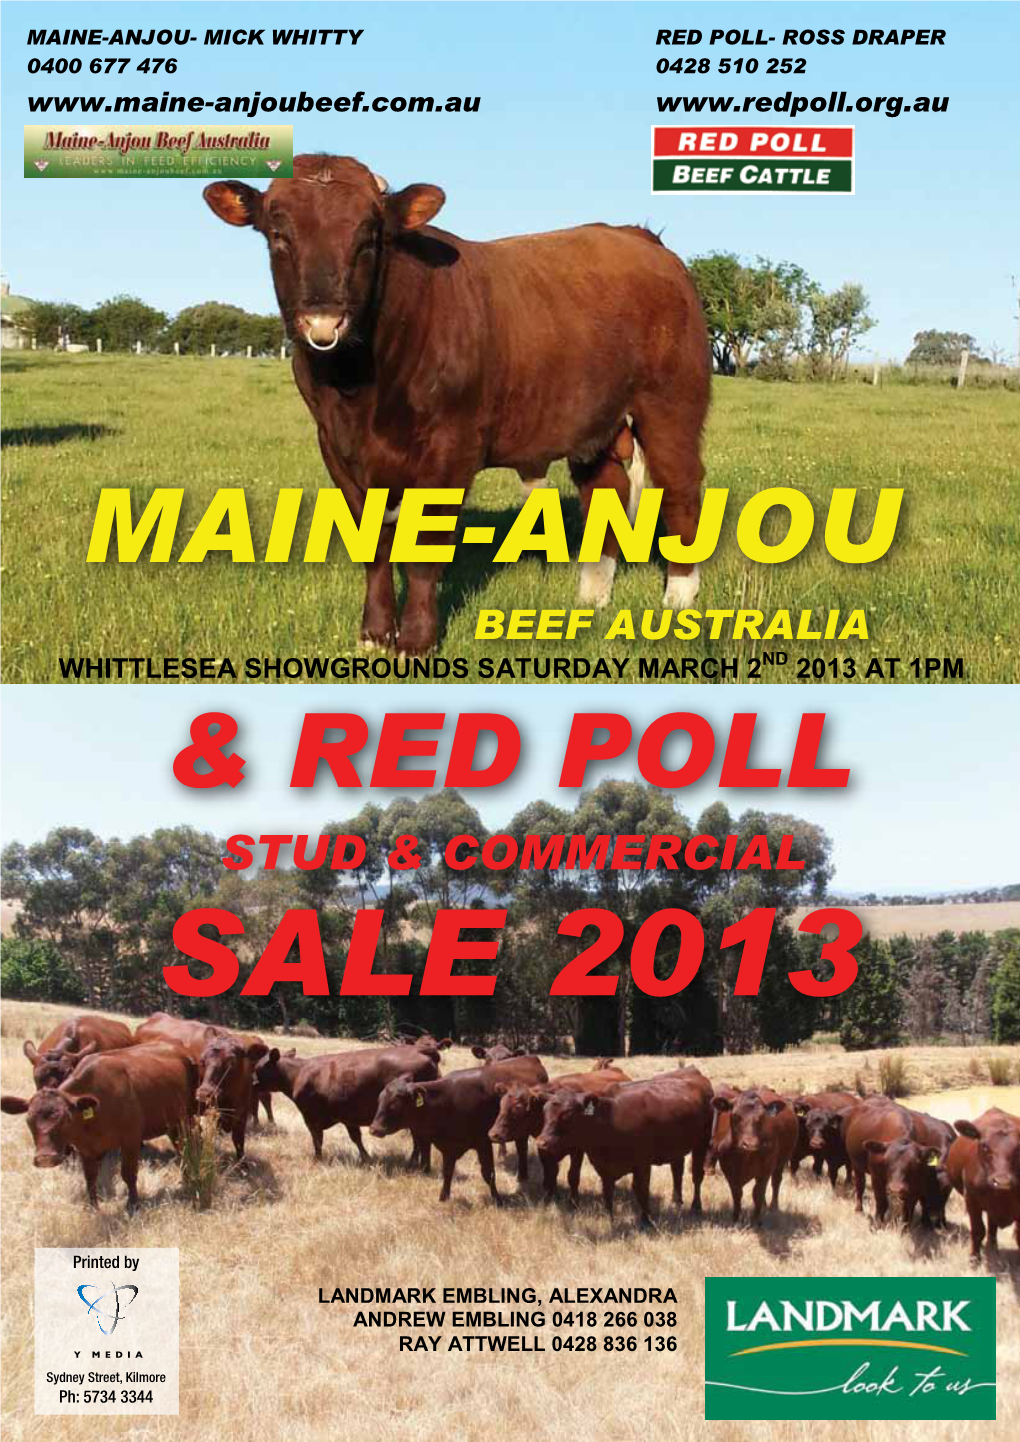 Maine-Anjou Bulls